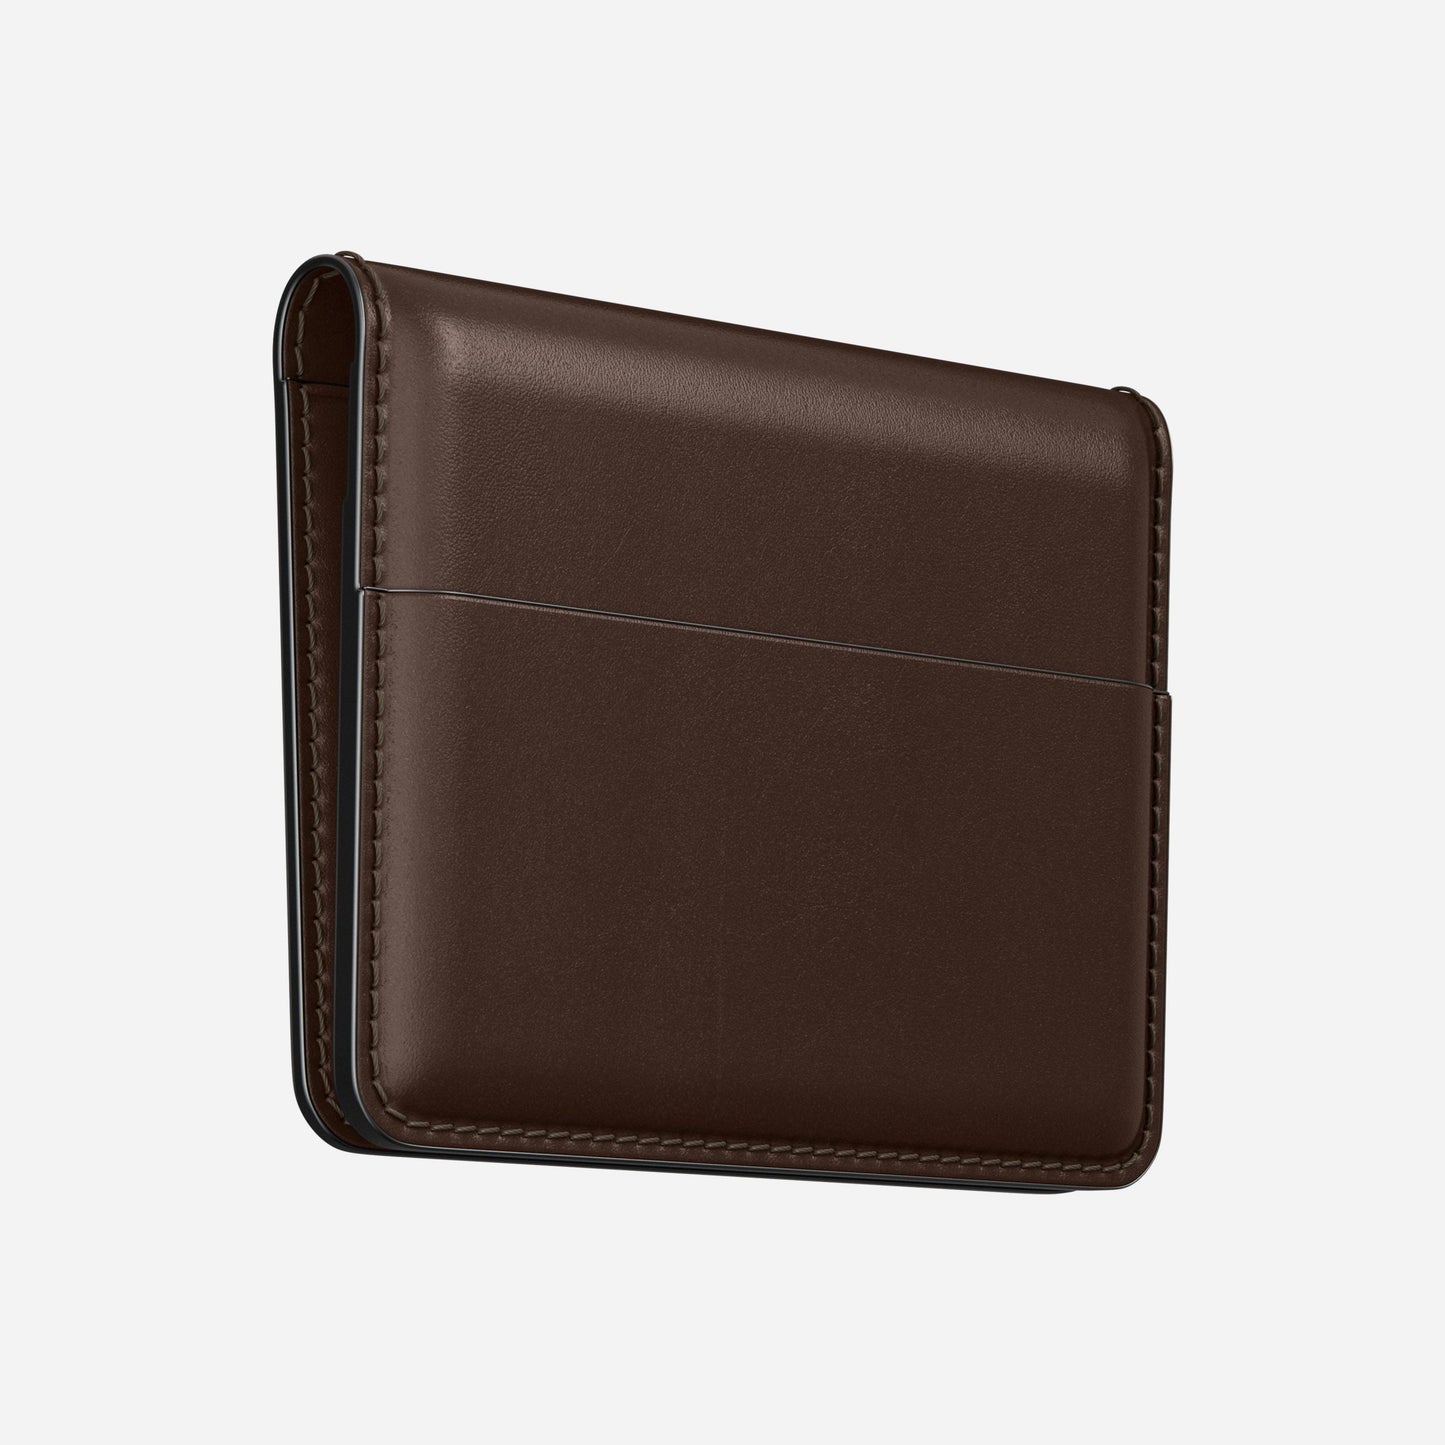 Brown Wallet for Men, Single Stich Light Weight Wallet